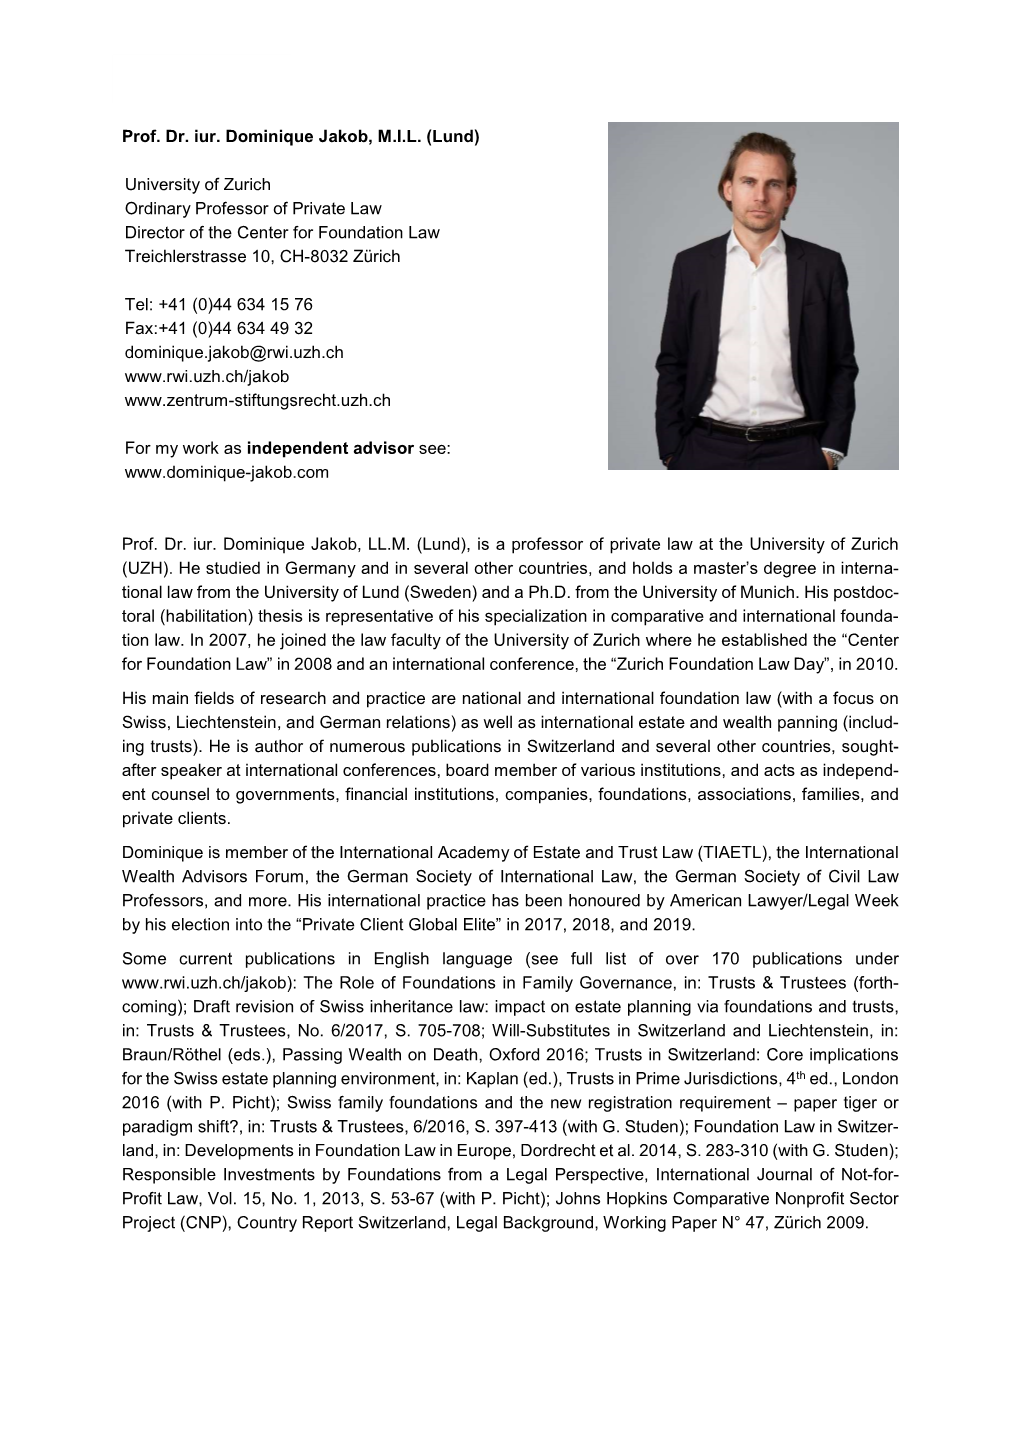 Prof. Dr. Iur. Dominique Jakob, M.I.L. (Lund) University of Zurich Ordinary